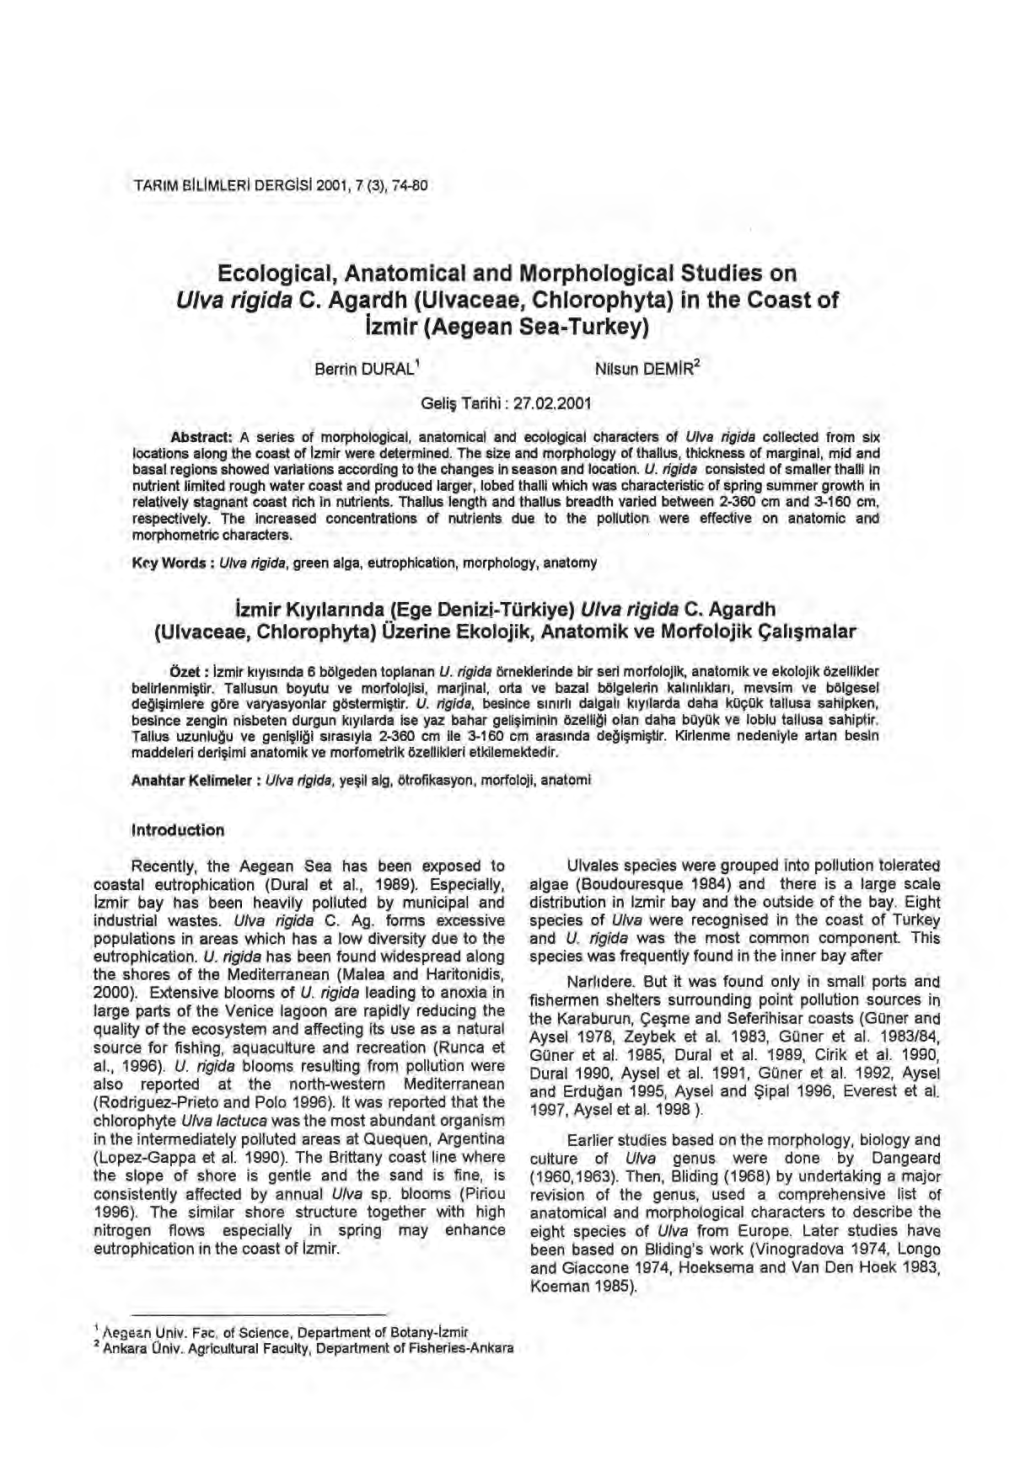 Ecological, Anatomical and Morphological Studies on Ulva Rigida C